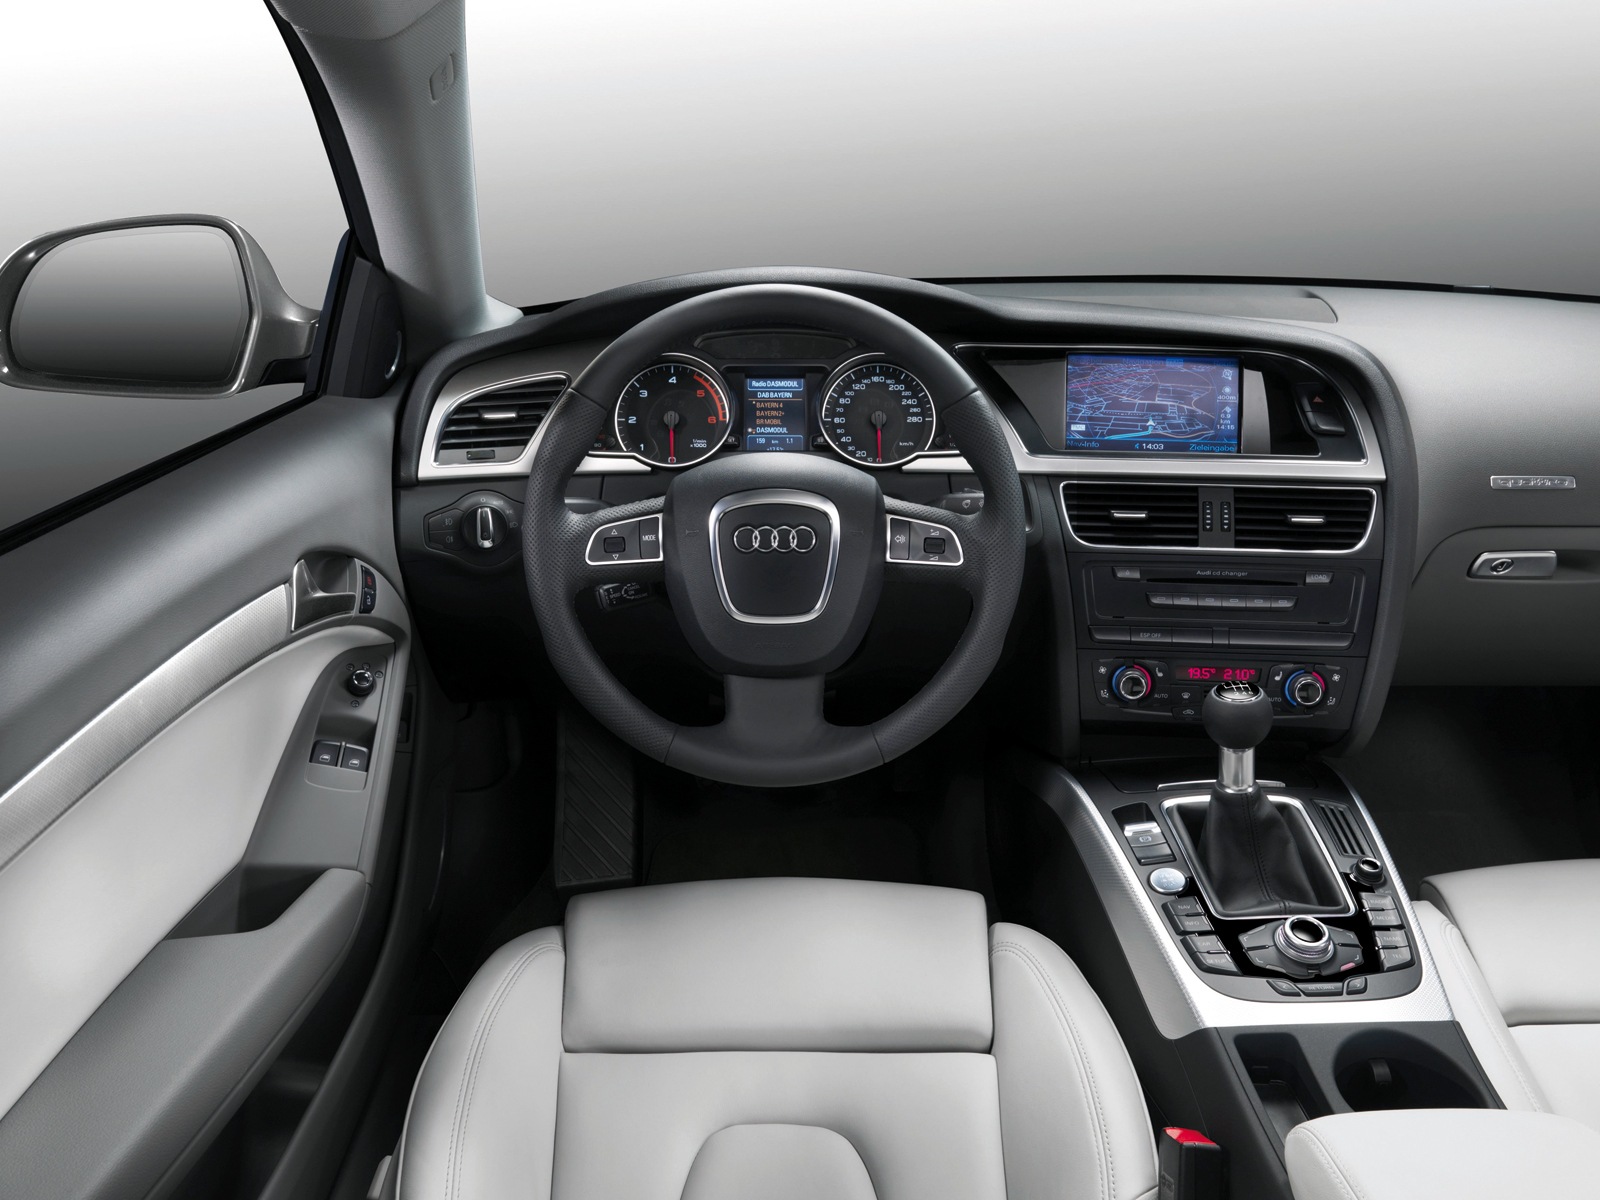 Audi A5 1st Generation Interior Dashboard